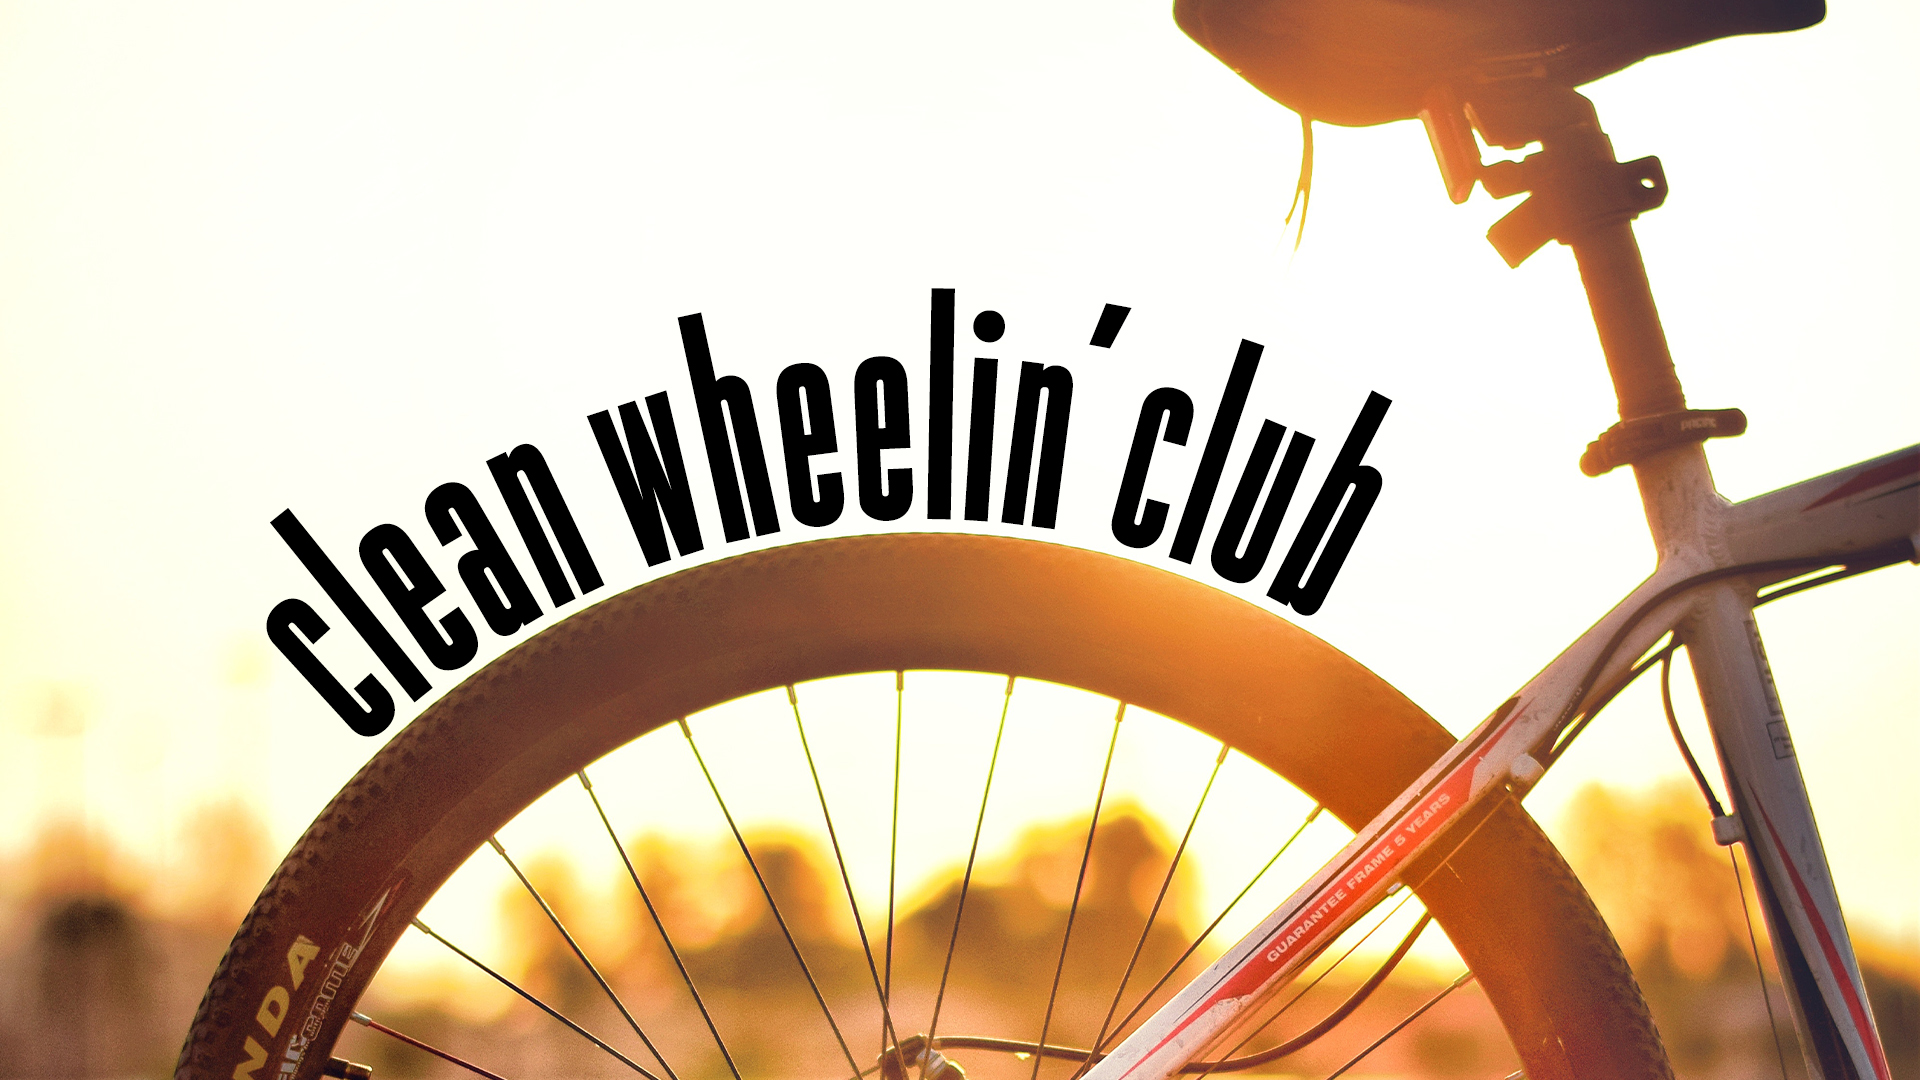 Clean Wheelin' Club

Monthly bike rides @ 9:00am
July 6, August 3, September 7
